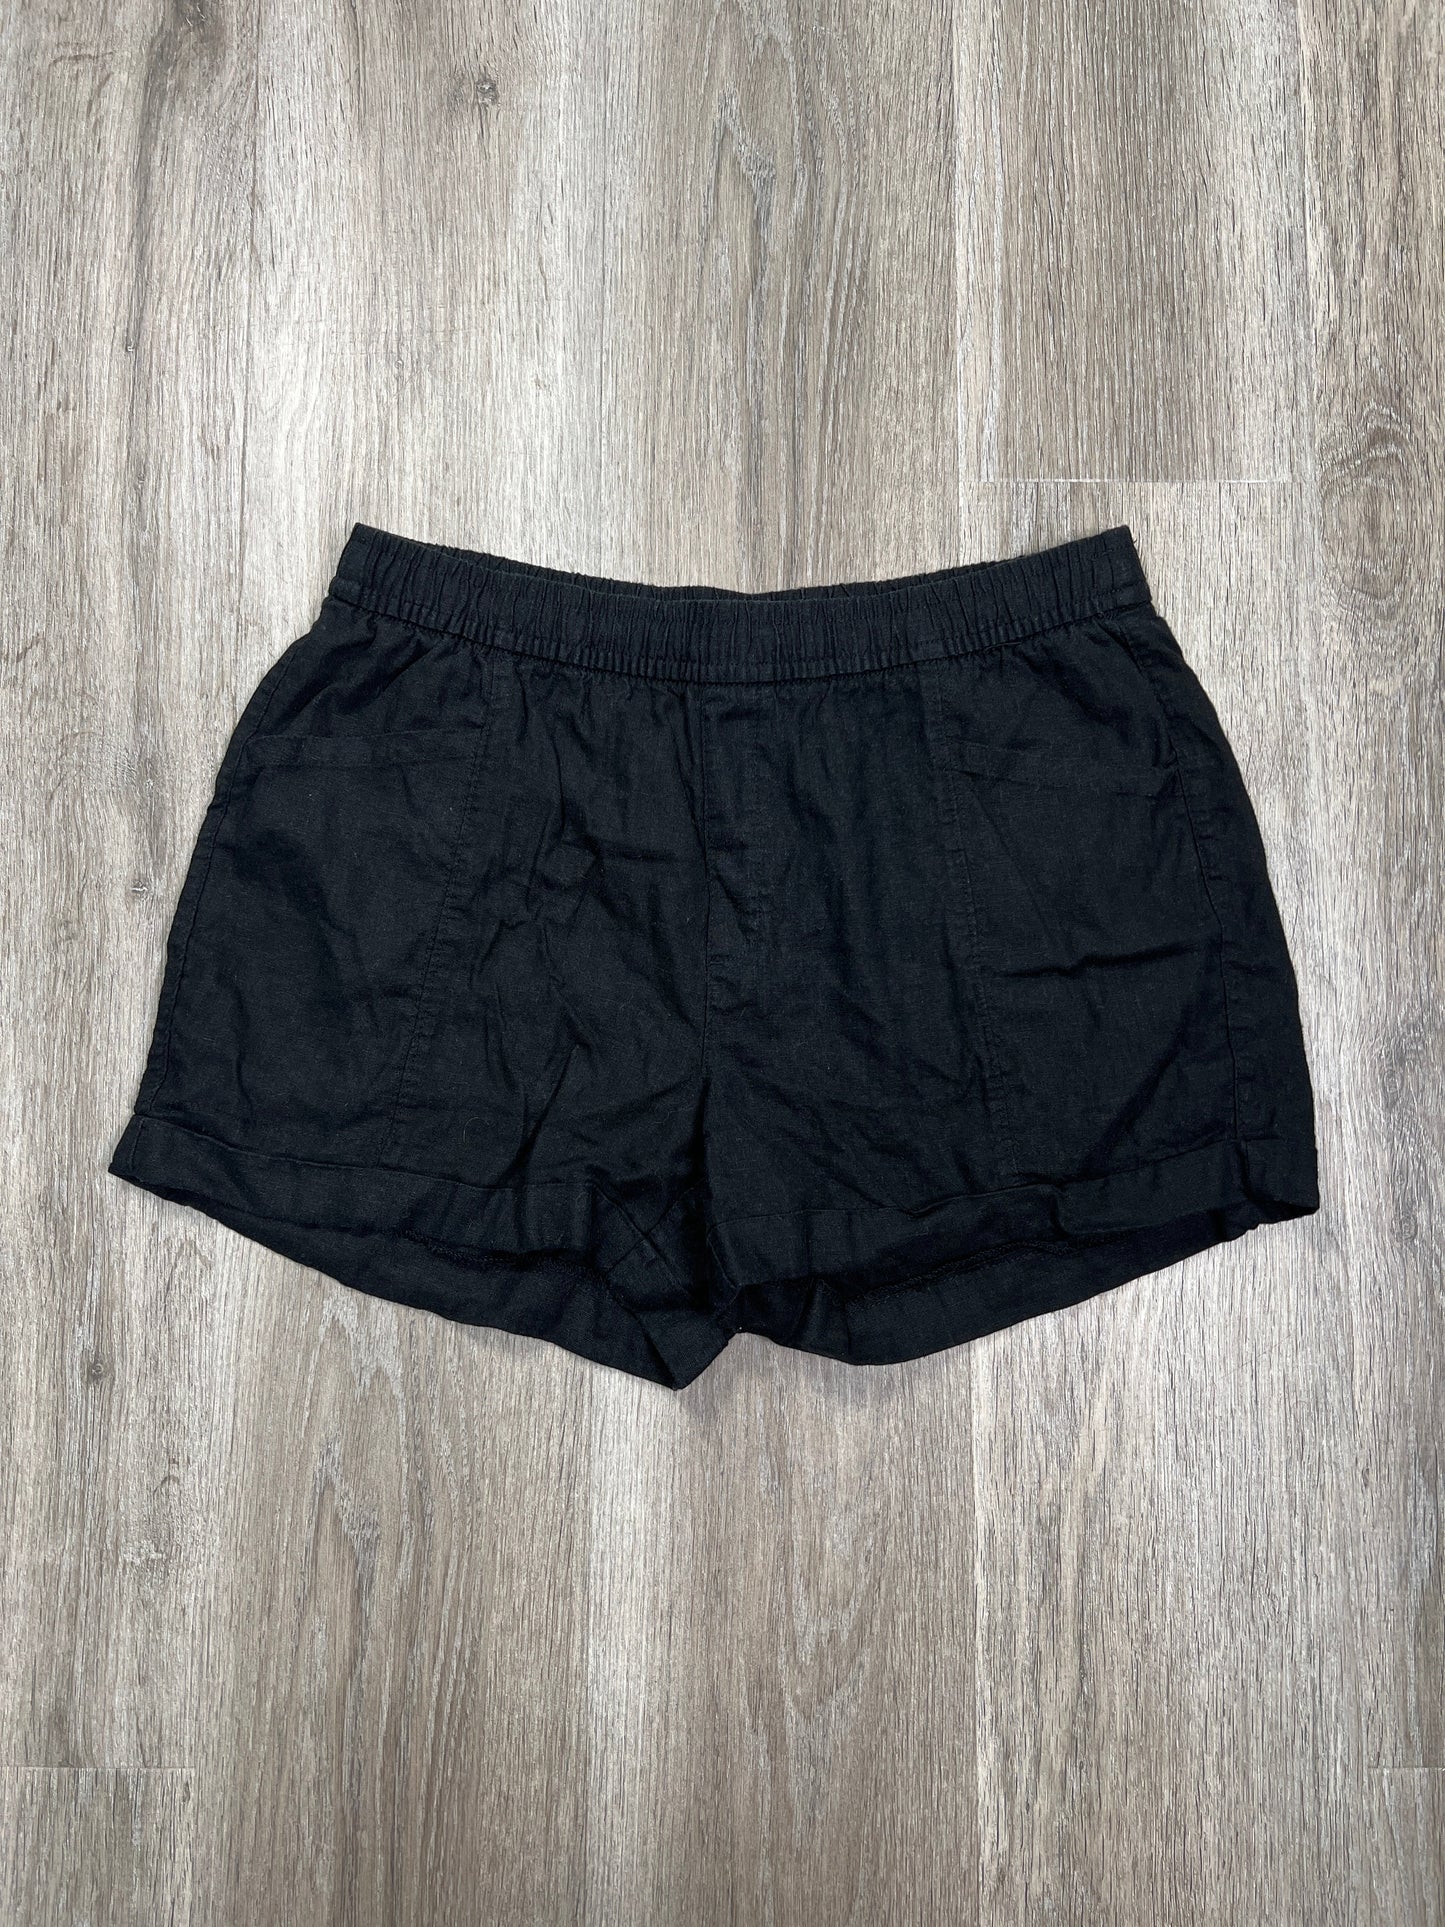 Black Shorts Old Navy, Size M